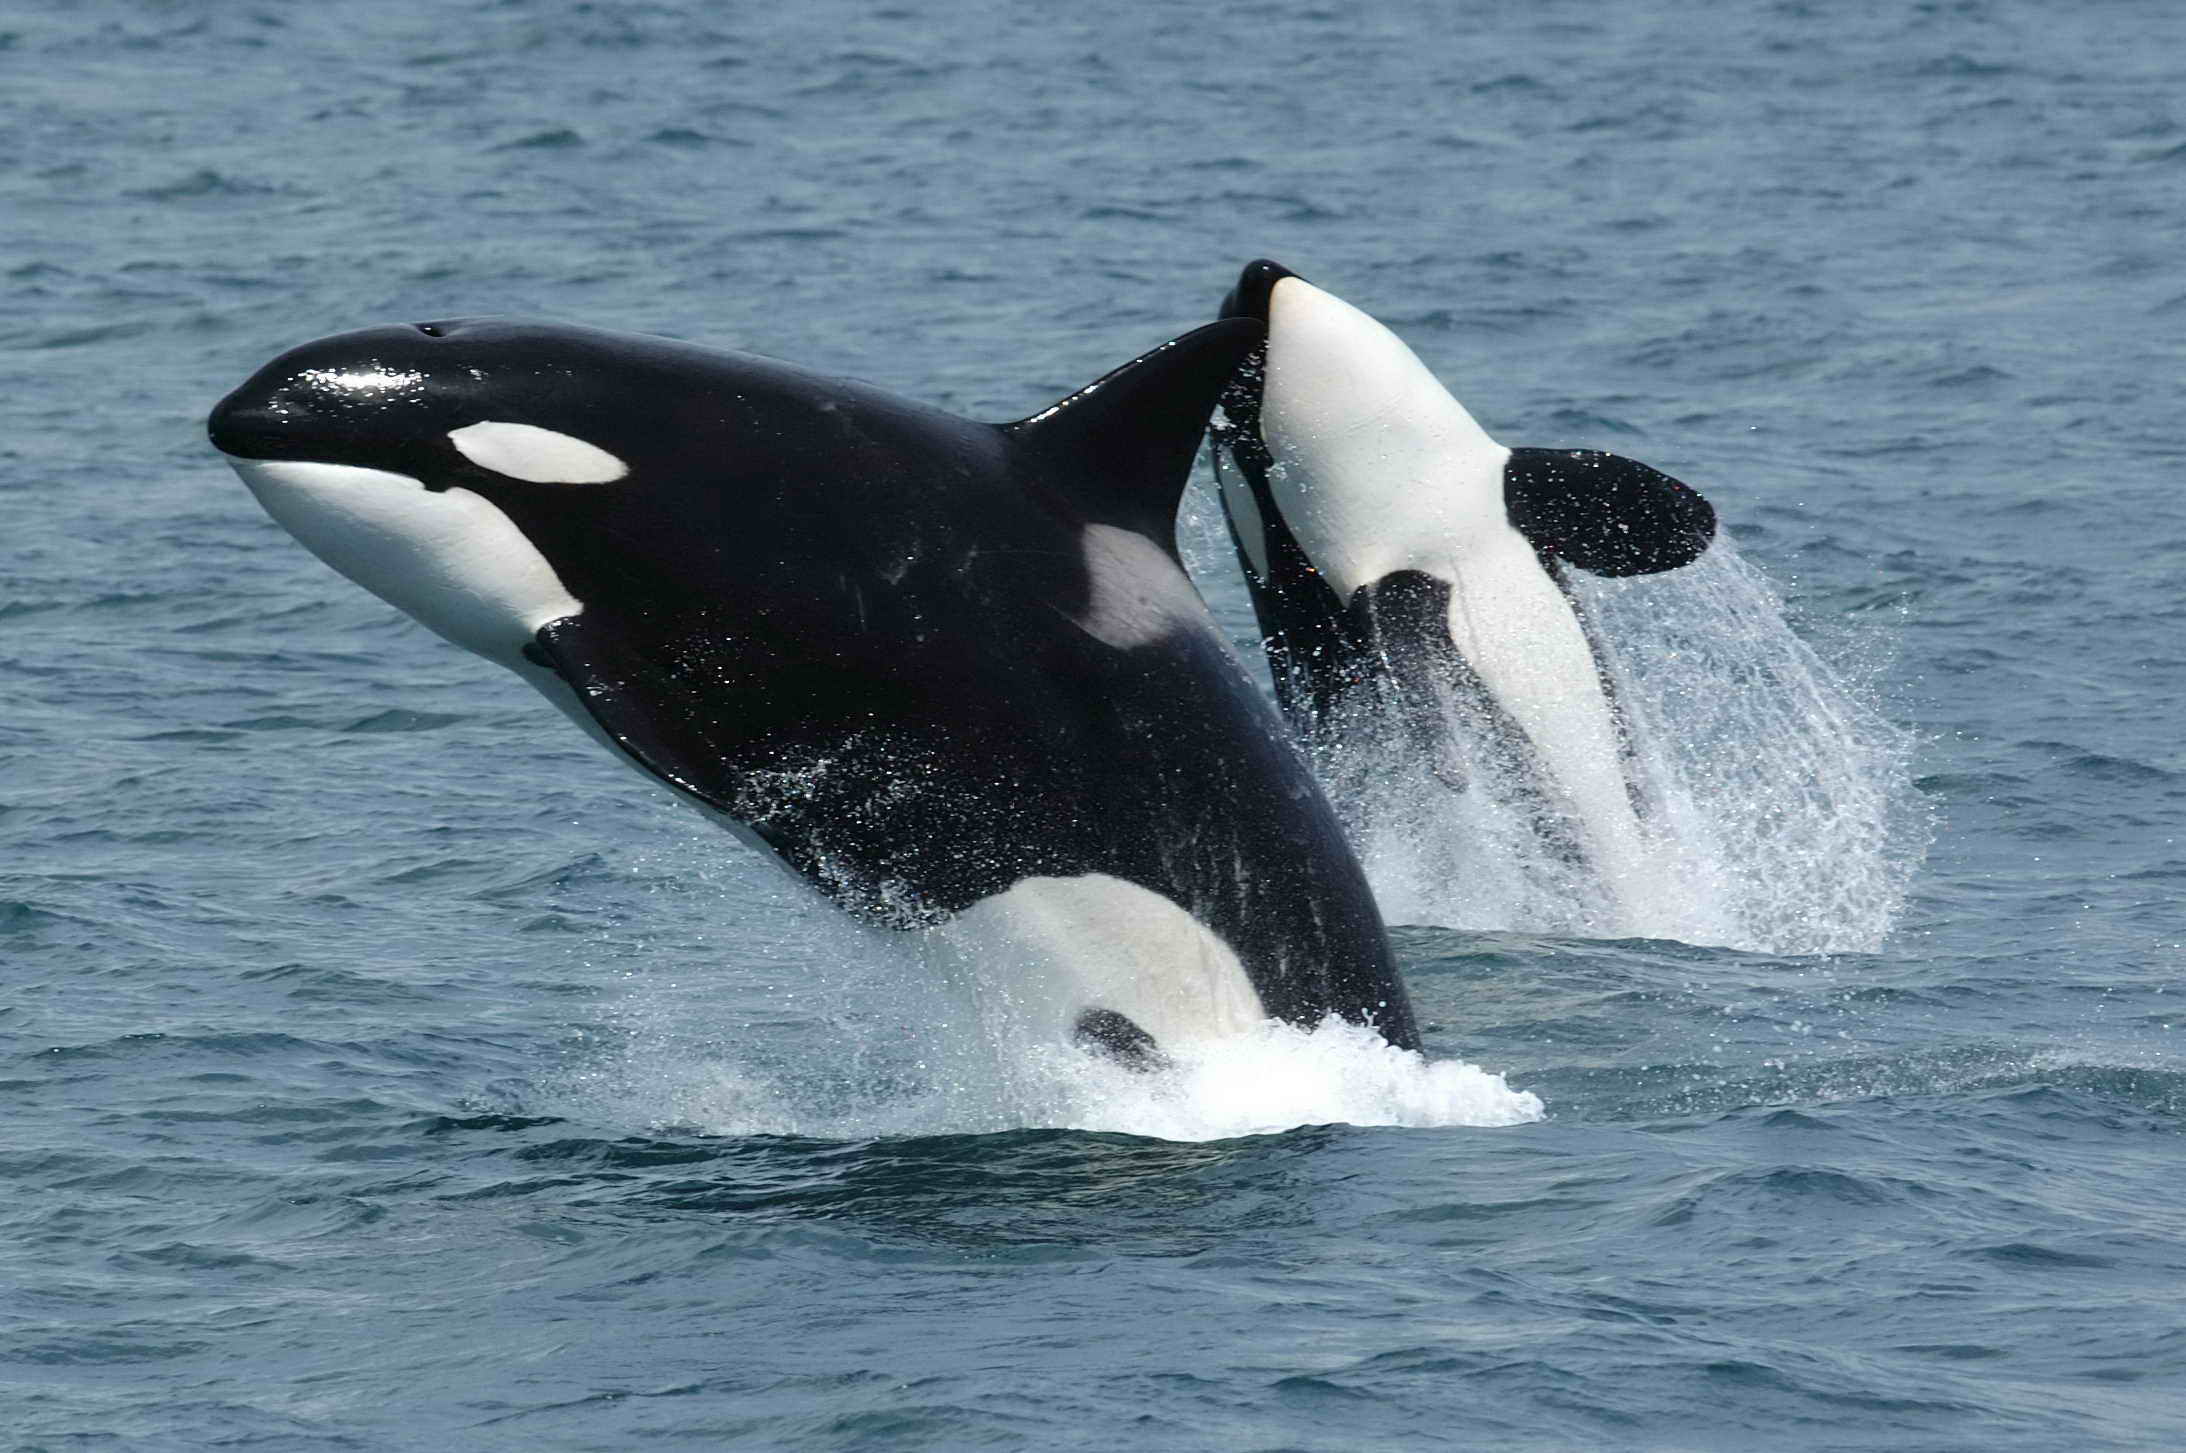 http://upload.wikimedia.org/wikipedia/commons/3/37/Killerwhales_jumping.jpg